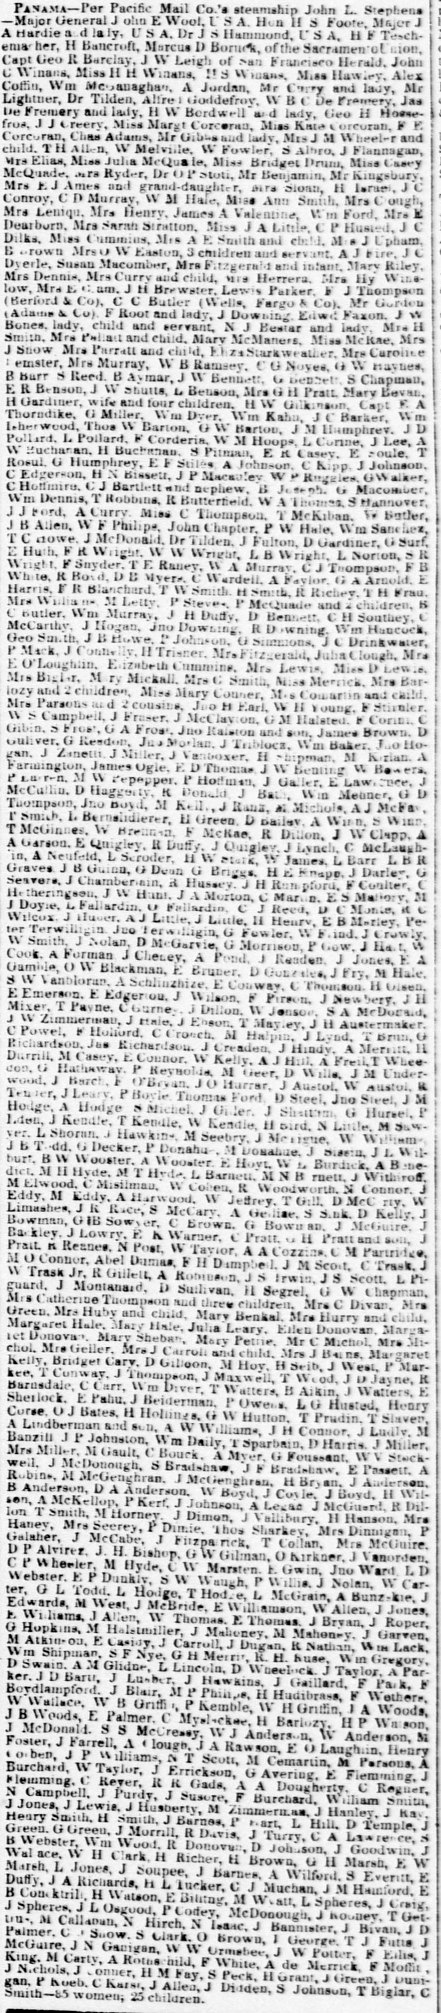 Passengers by the John L. Stephens, February 16, 1854. DAC.